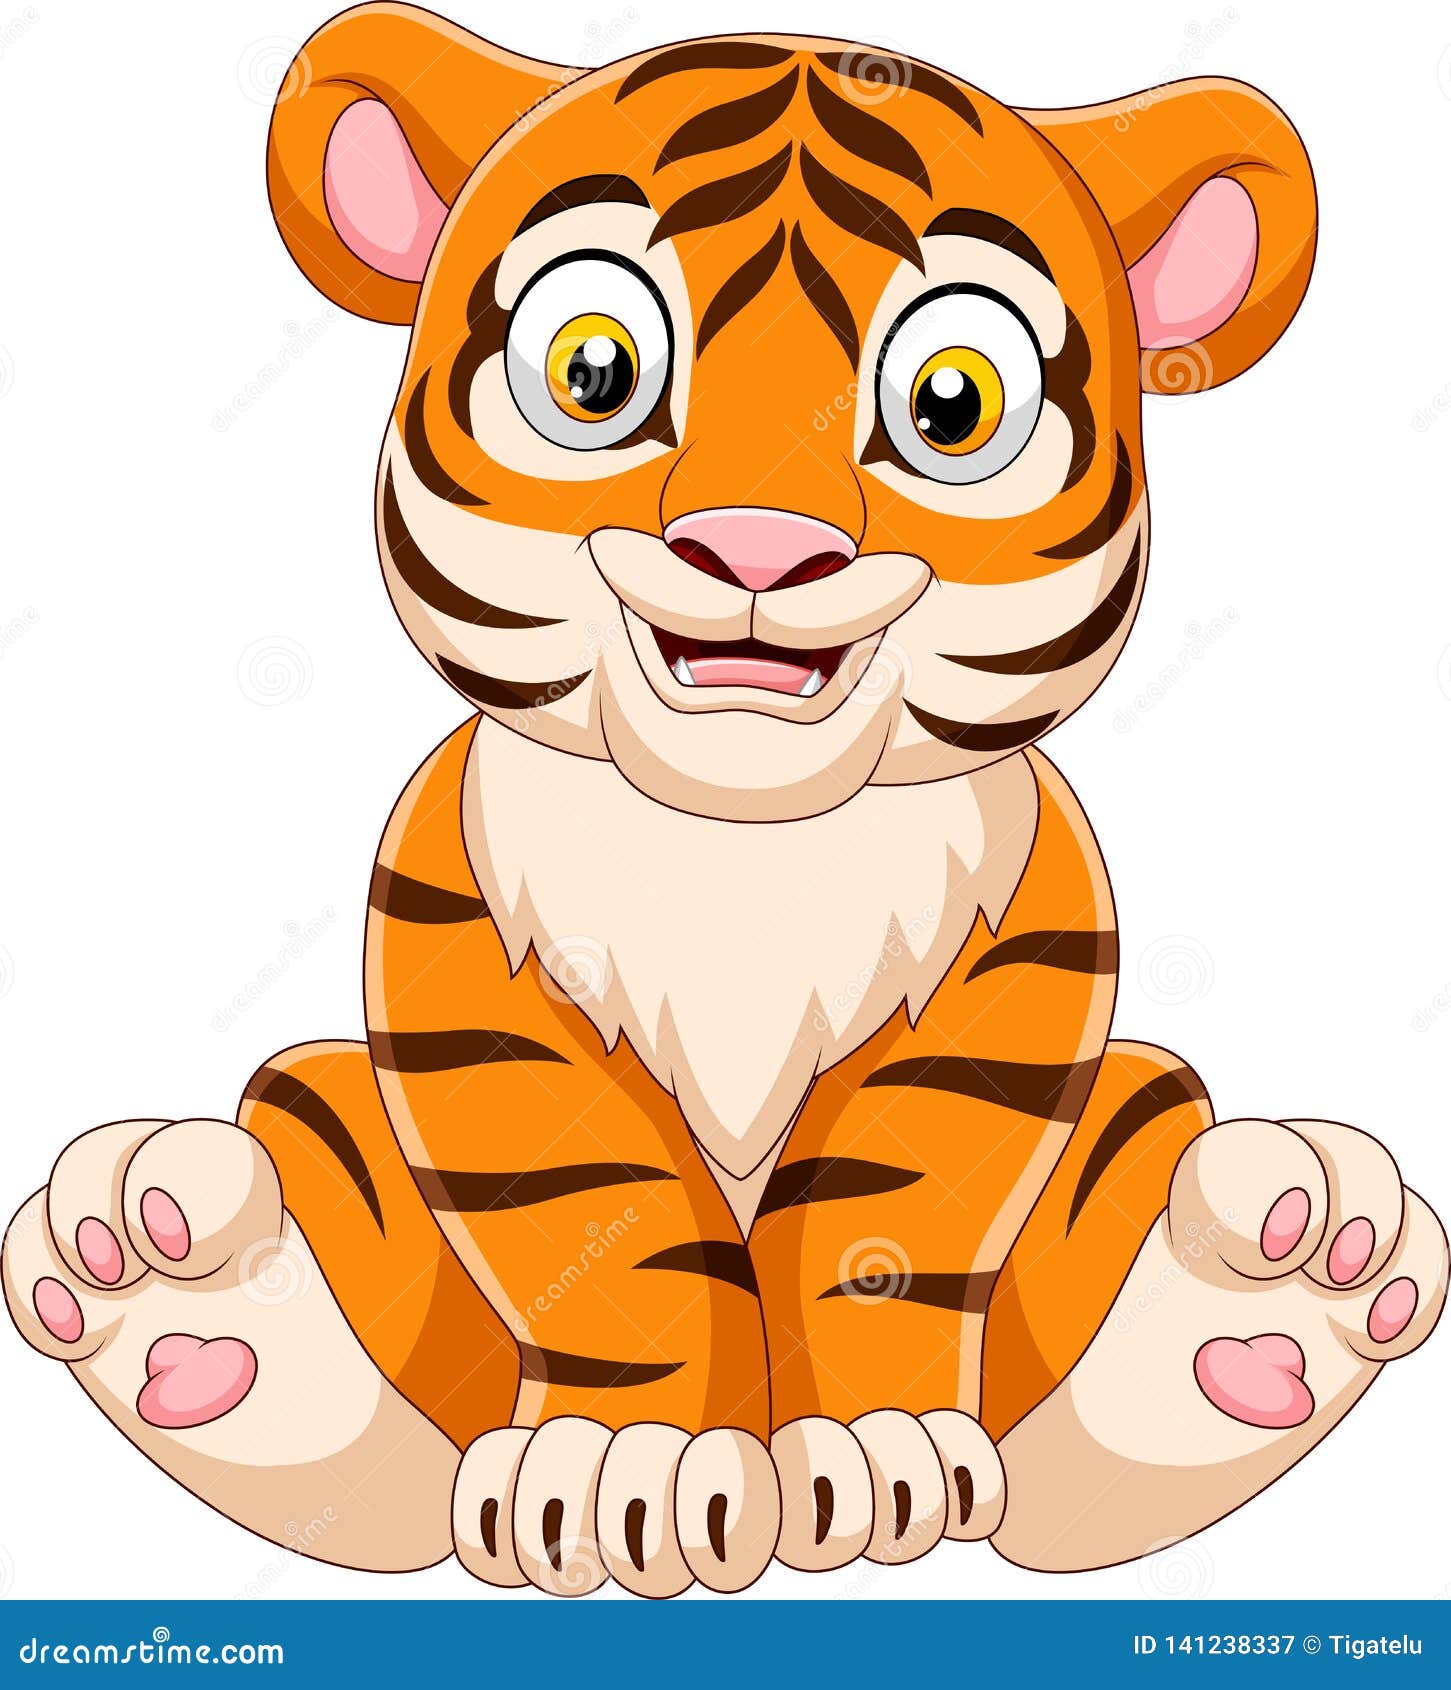 Cartoon baby tiger sitting stock vector. Illustration of sitting - 141238337